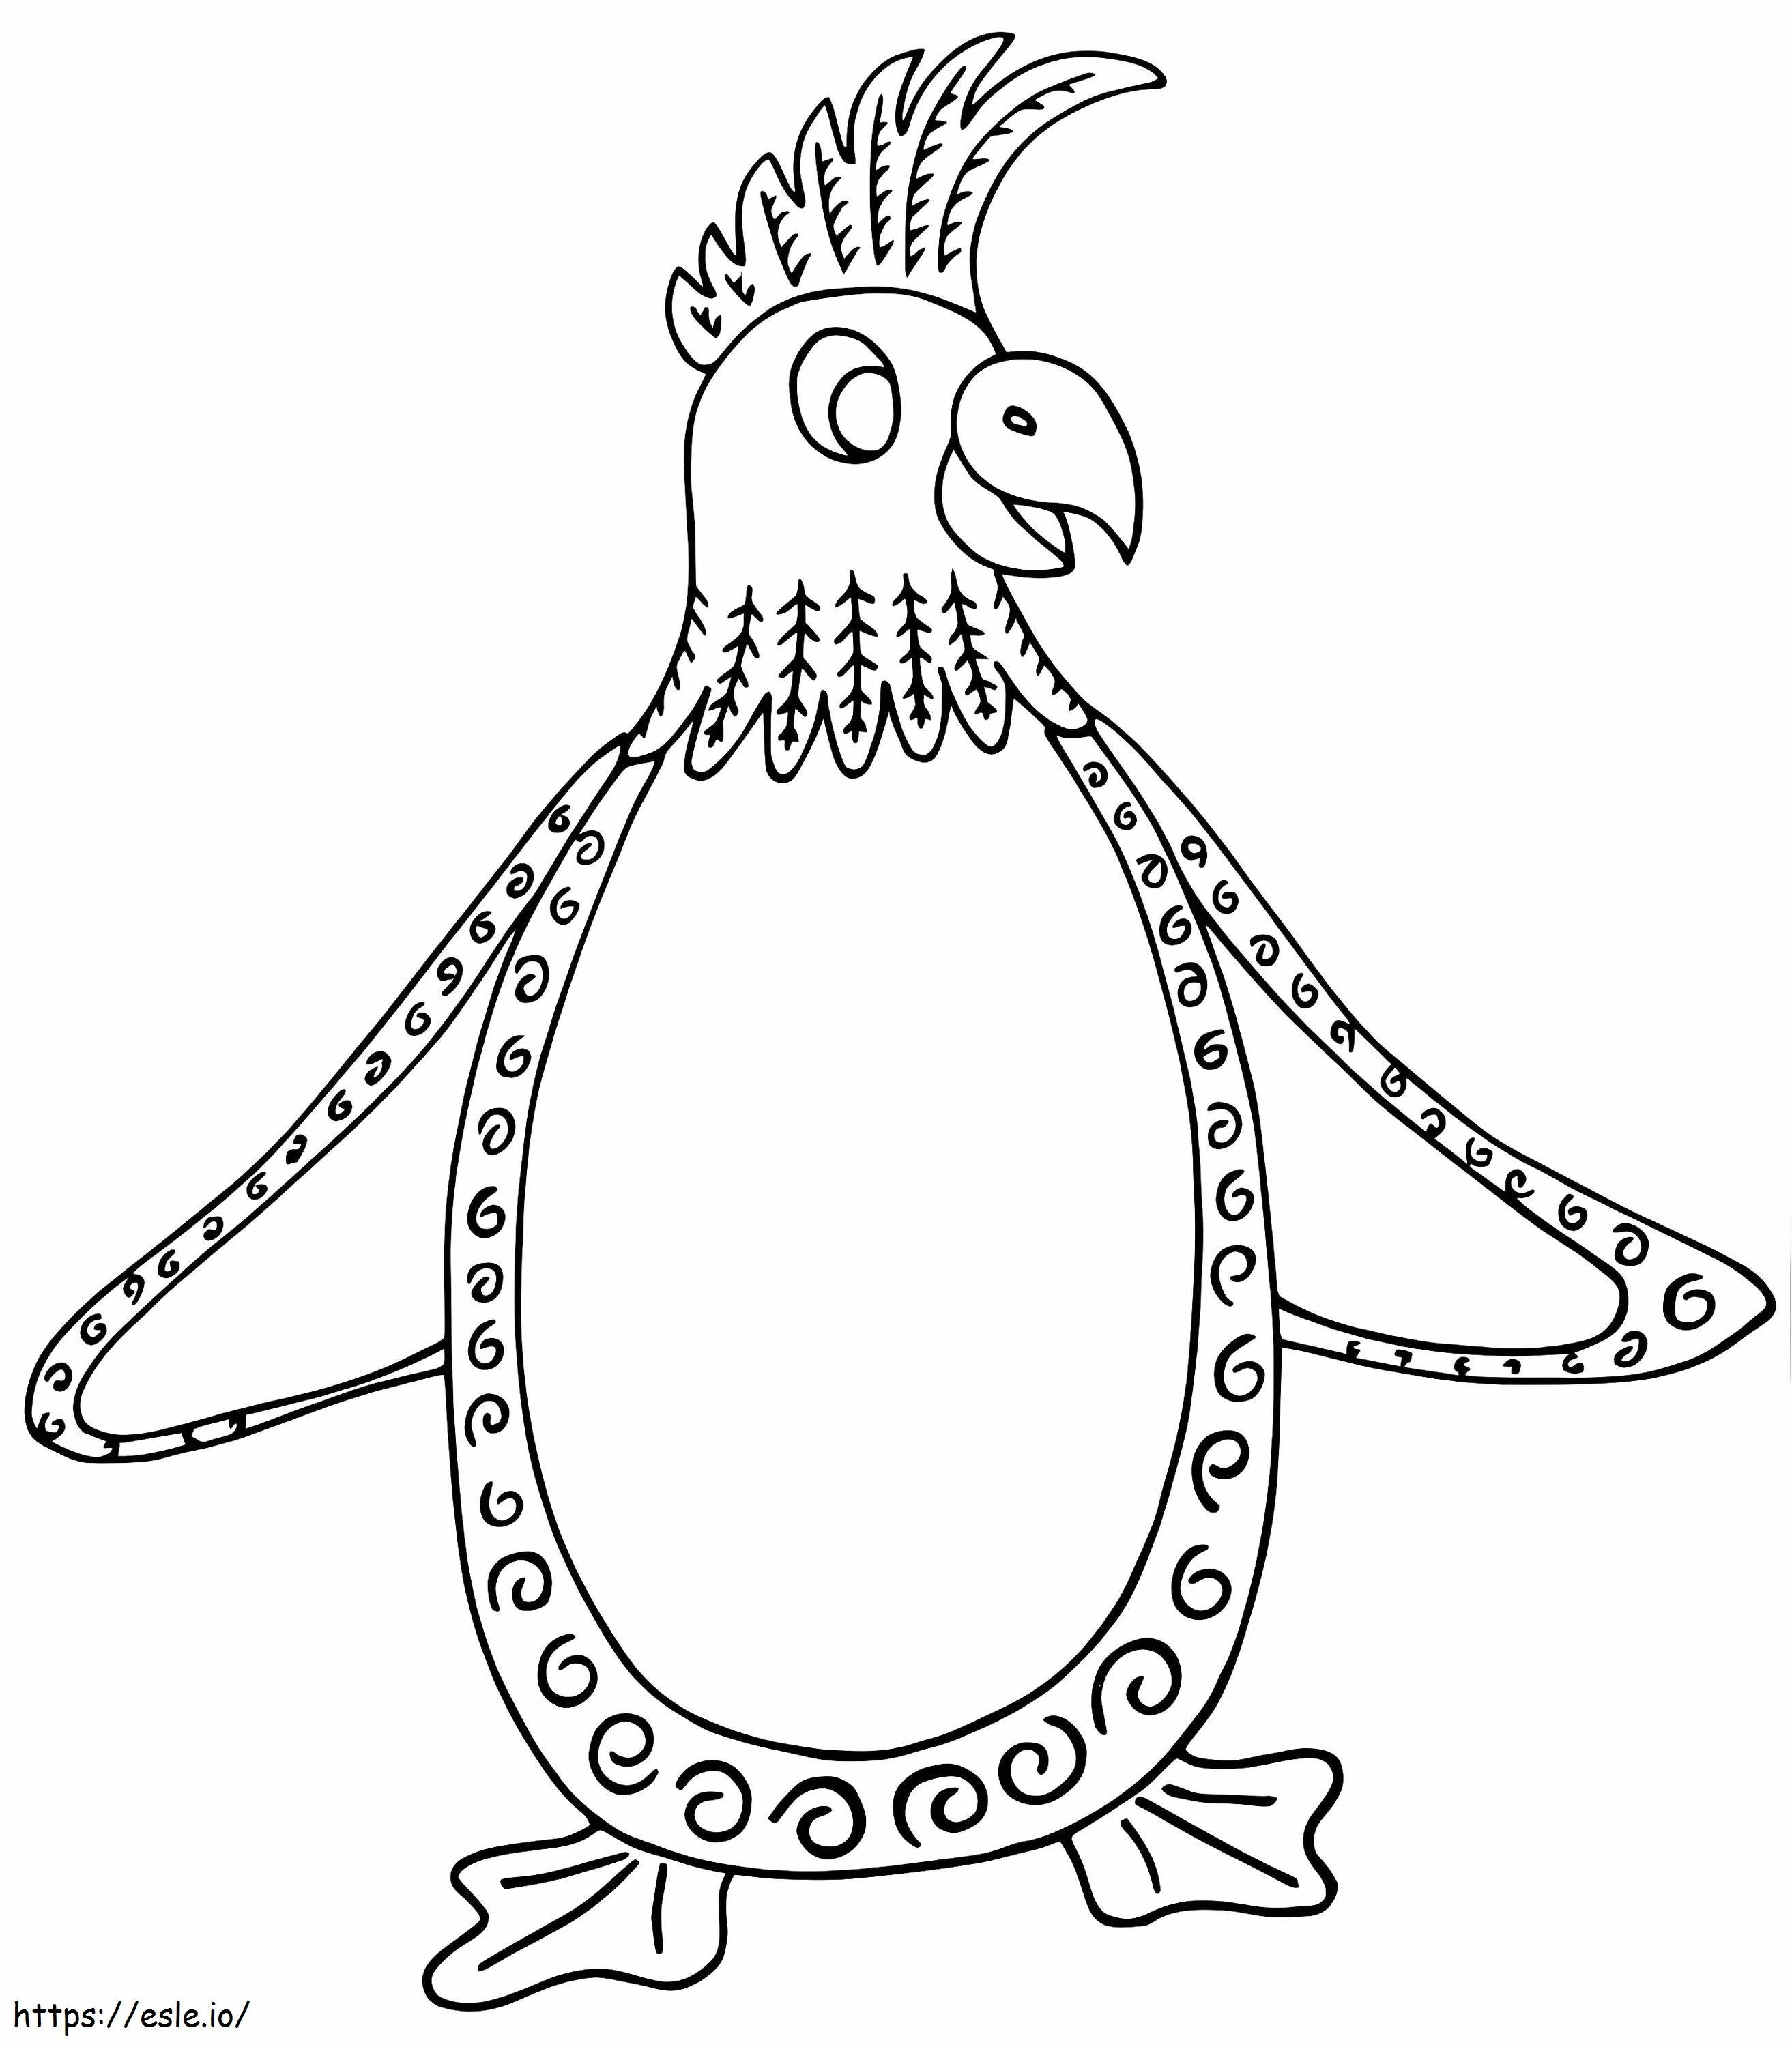 Penguin Alebrijes coloring page